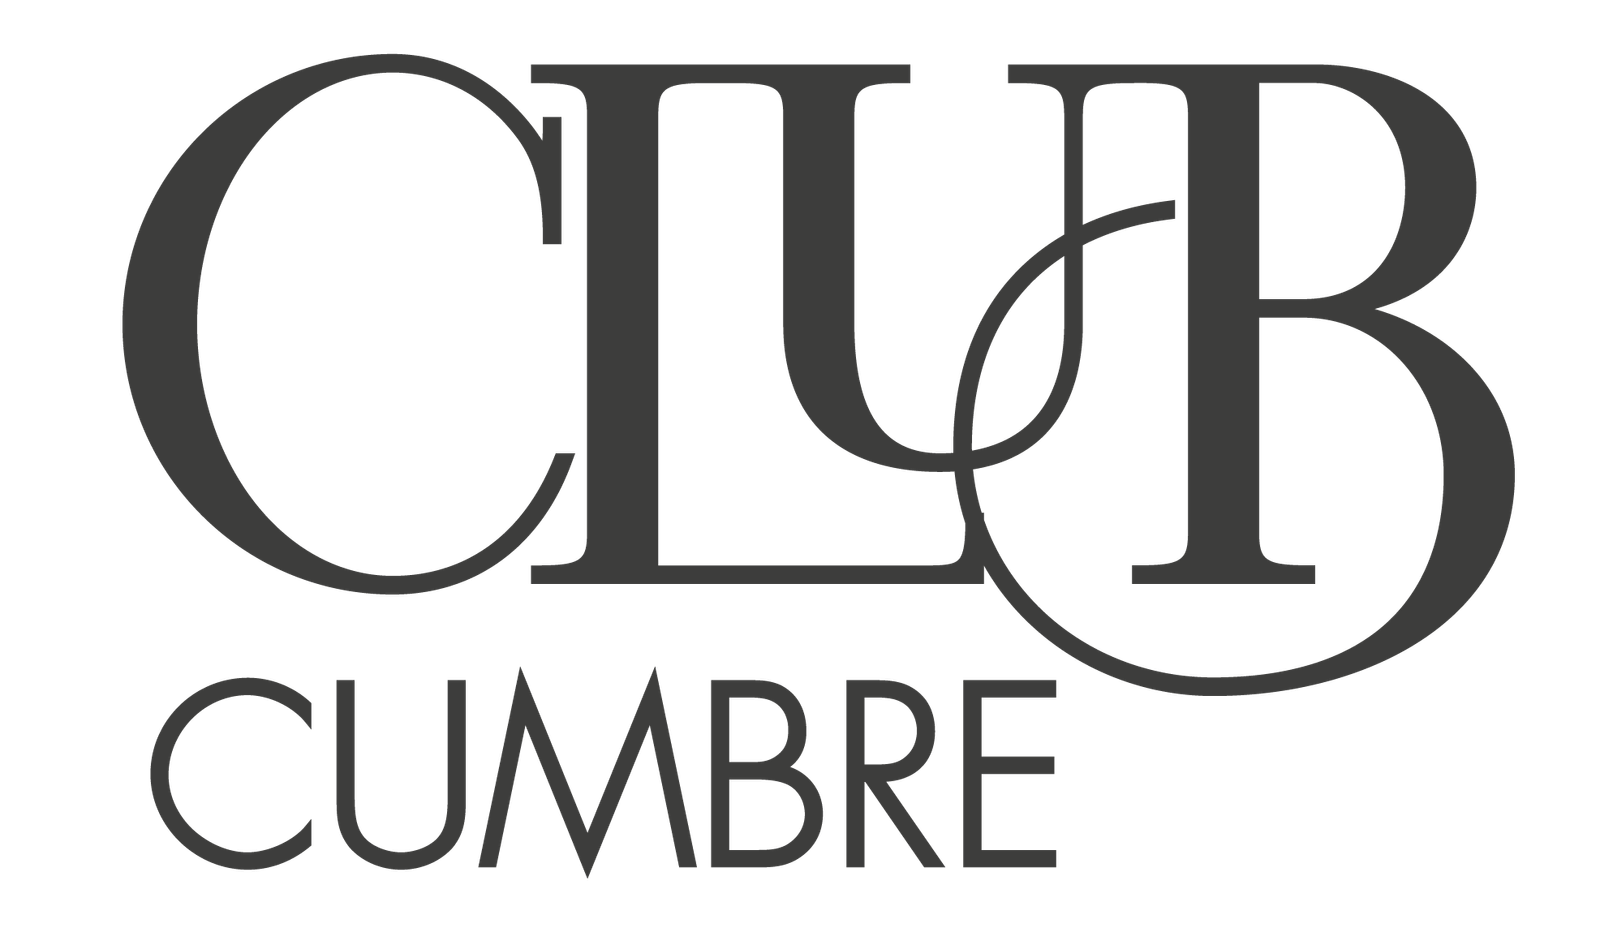 Logo Navbar Club